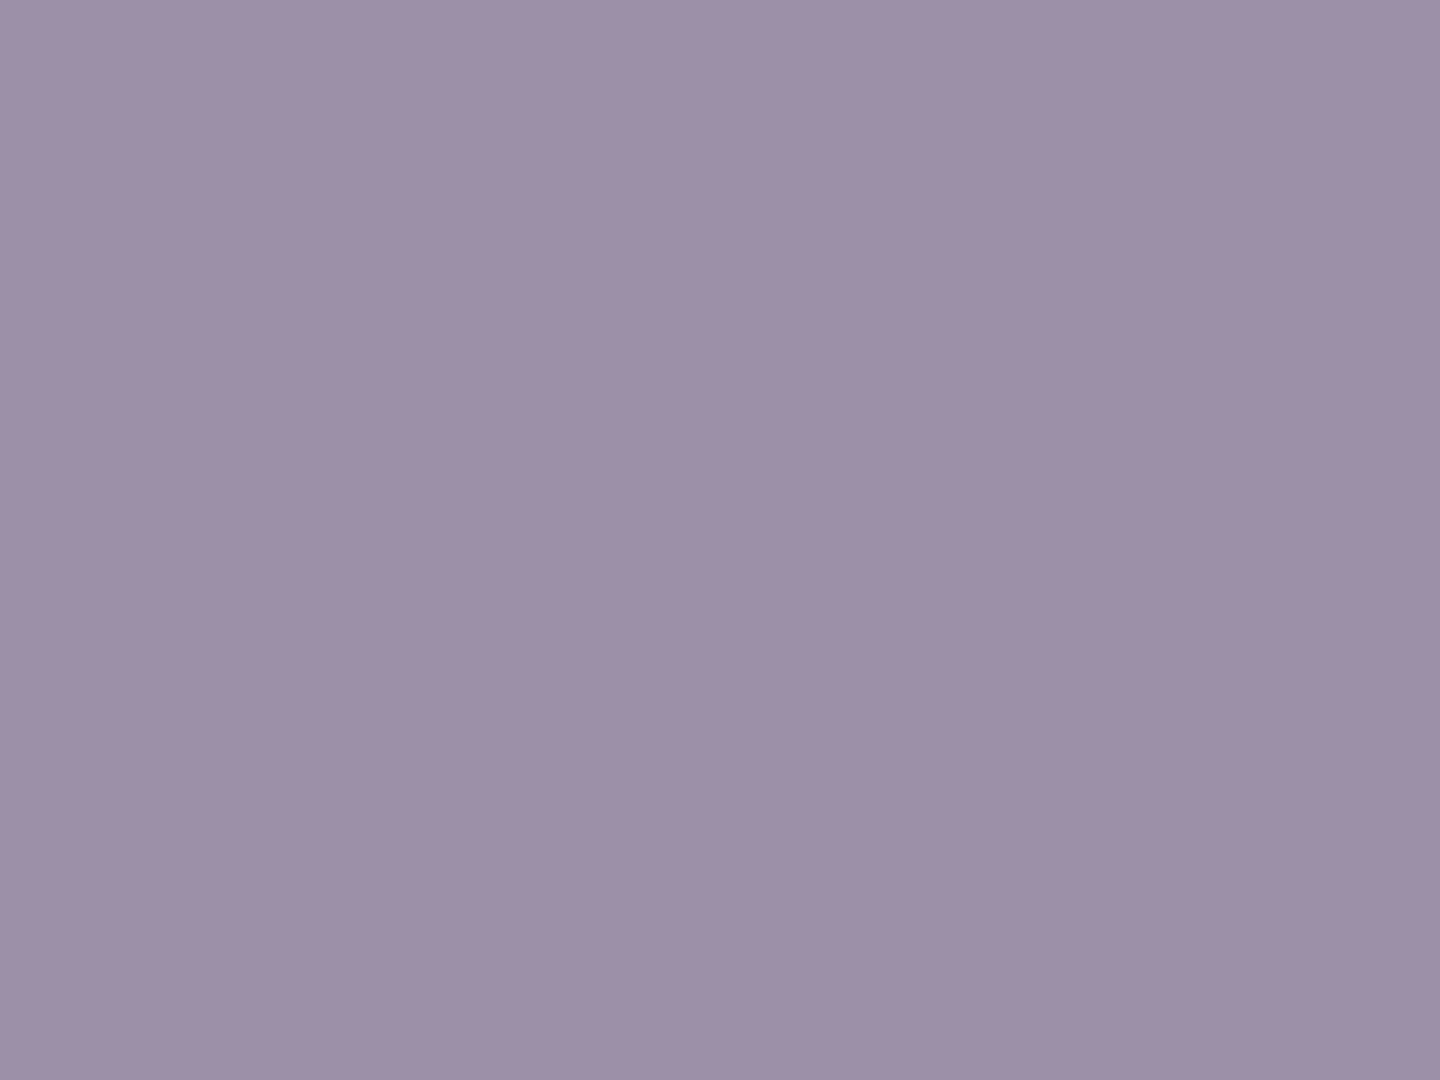 Duvet Cover Nejd - Dusty Lilac